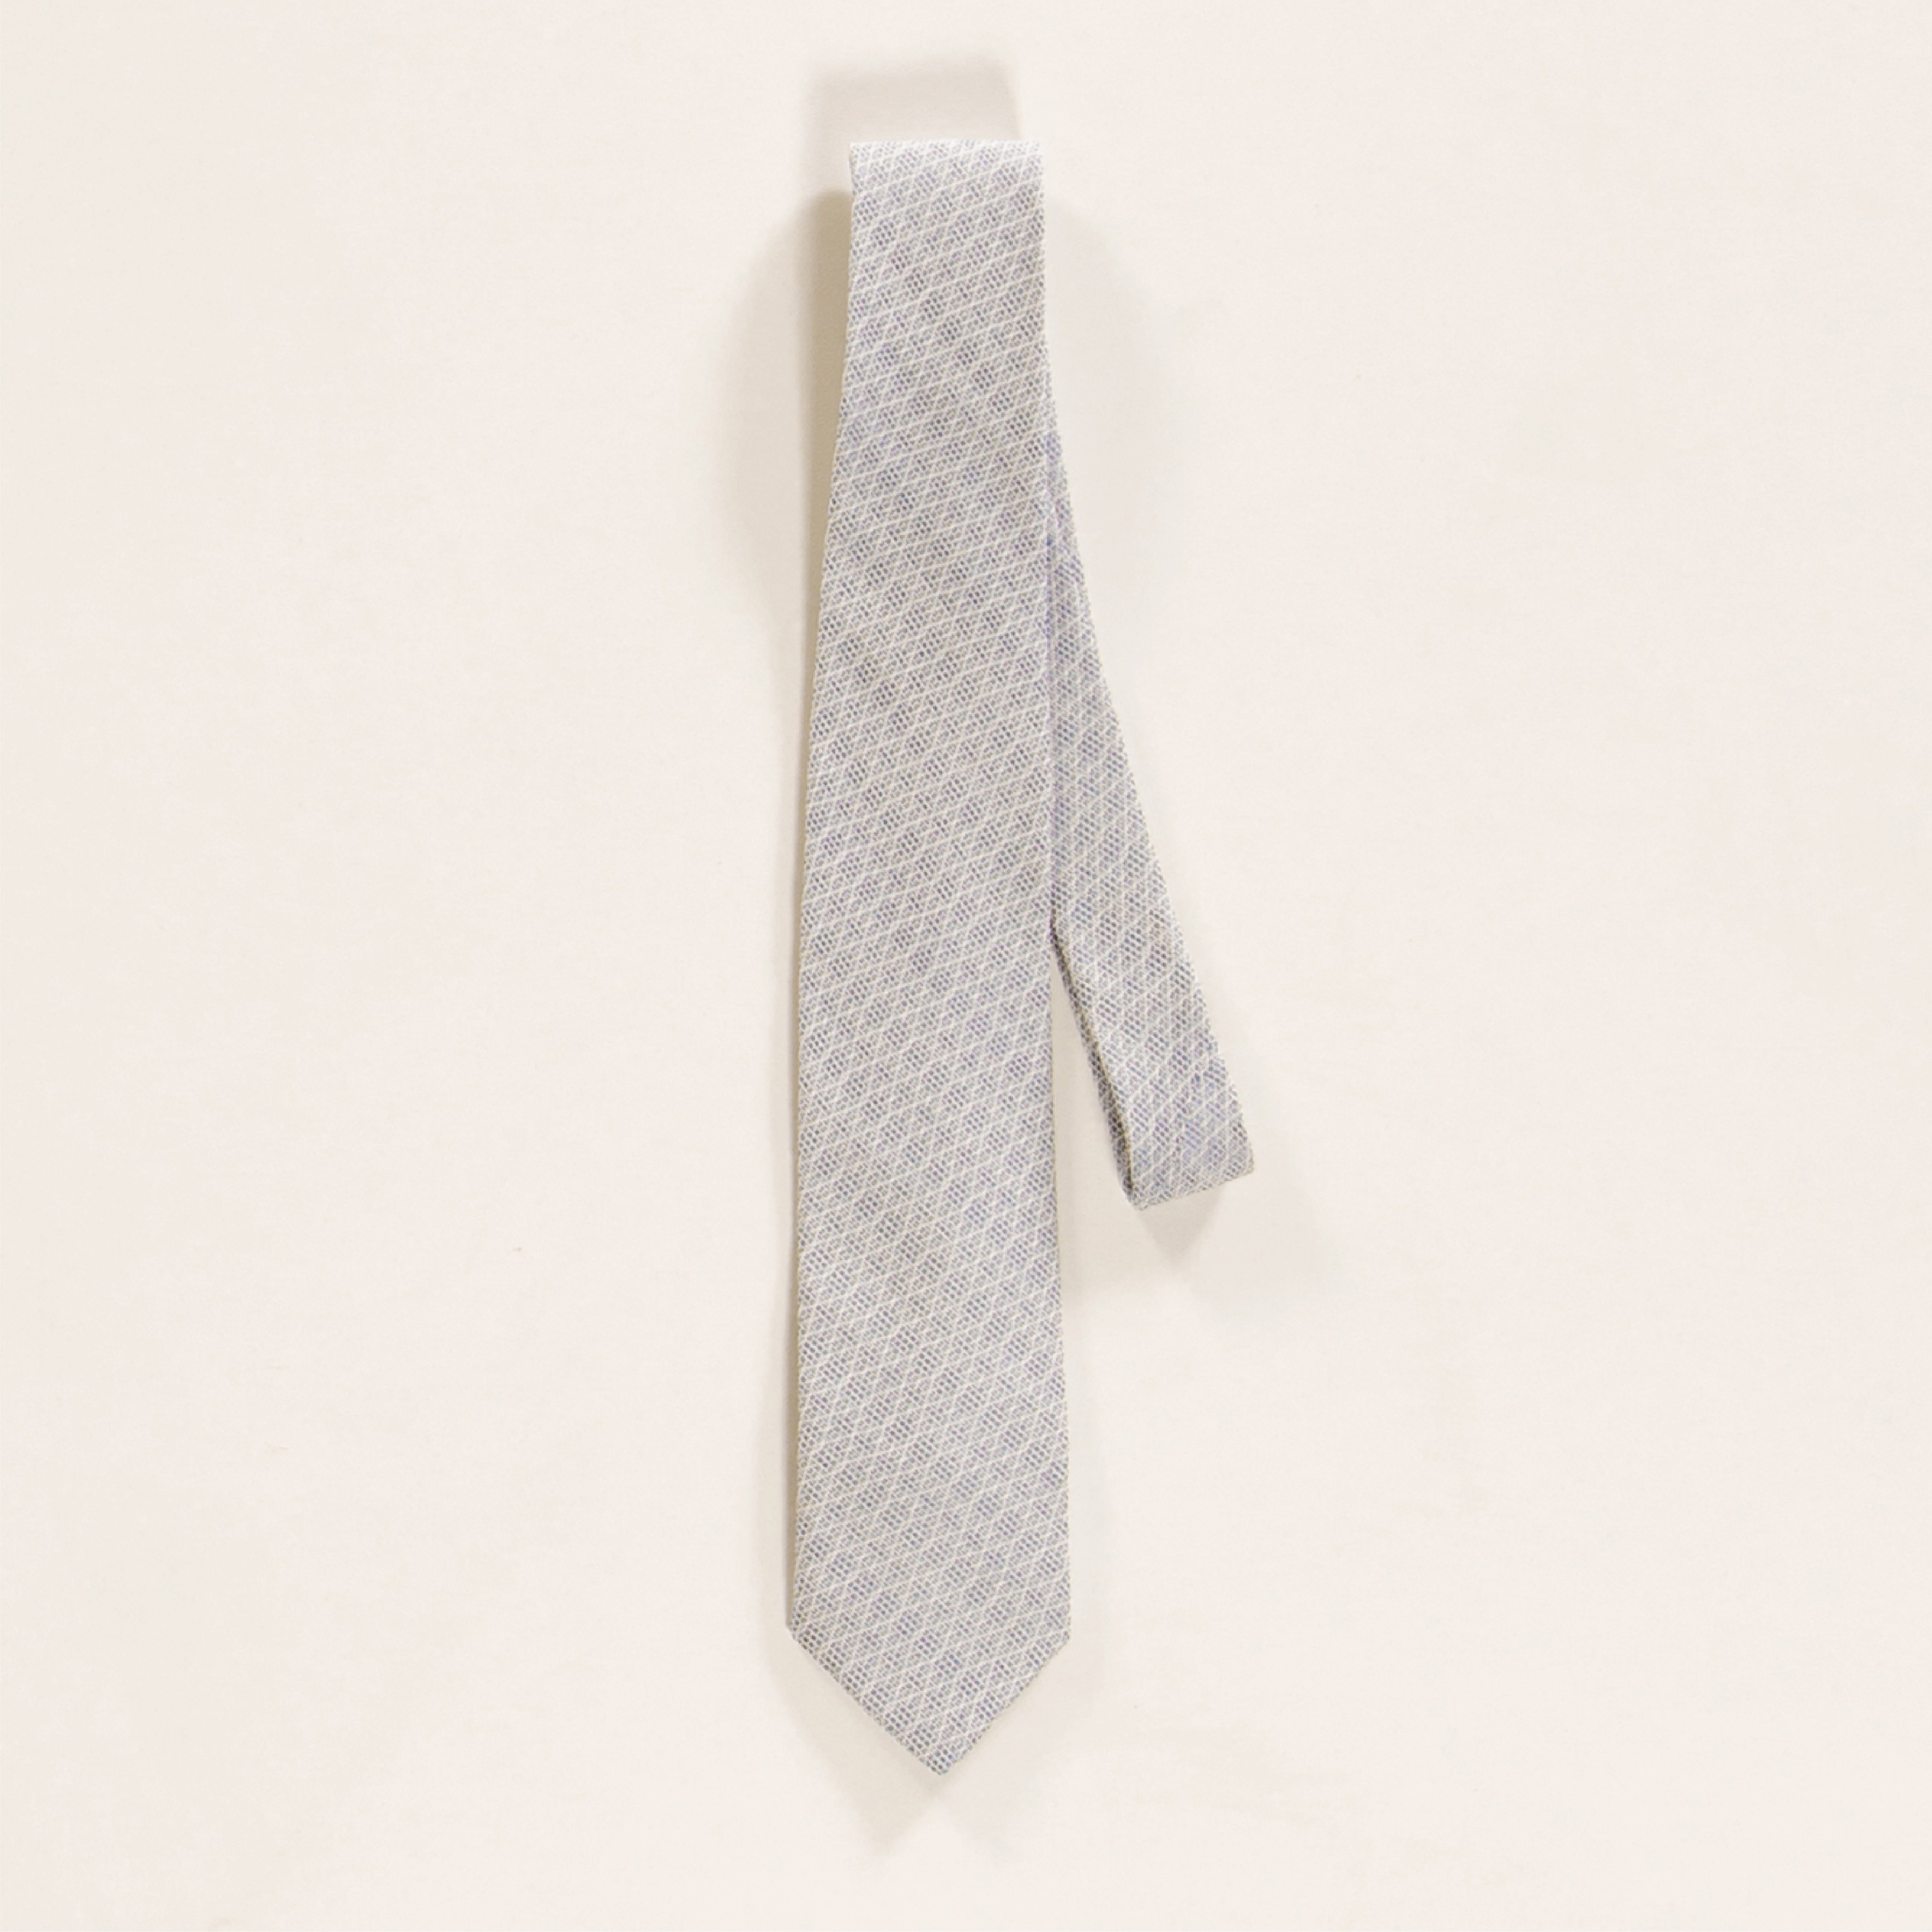 DoiTung Necktie - Gift set 2020 -Tiny Polygon Light Blue (7.6x150 cm.) ชุดของขวัญ เนคไท ดอยตุง